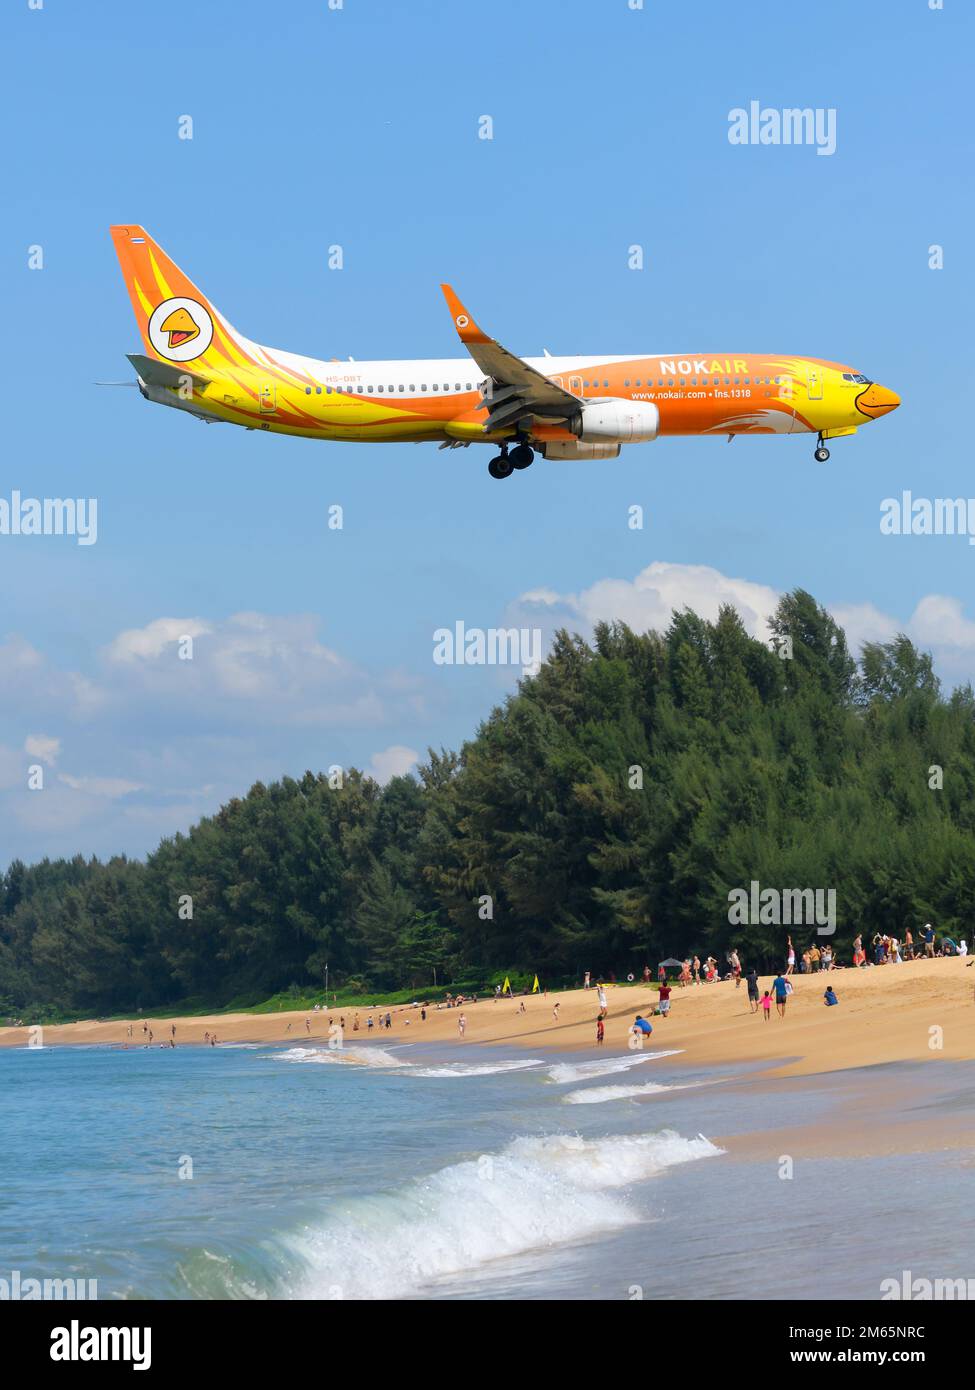 Nok Air Boeing 737 aircraft flying over Mai Khao Beach before landing at Phuket Airport. Airplane 737-800 of NokAir Thailand (Nok Air Thailand). Stock Photo